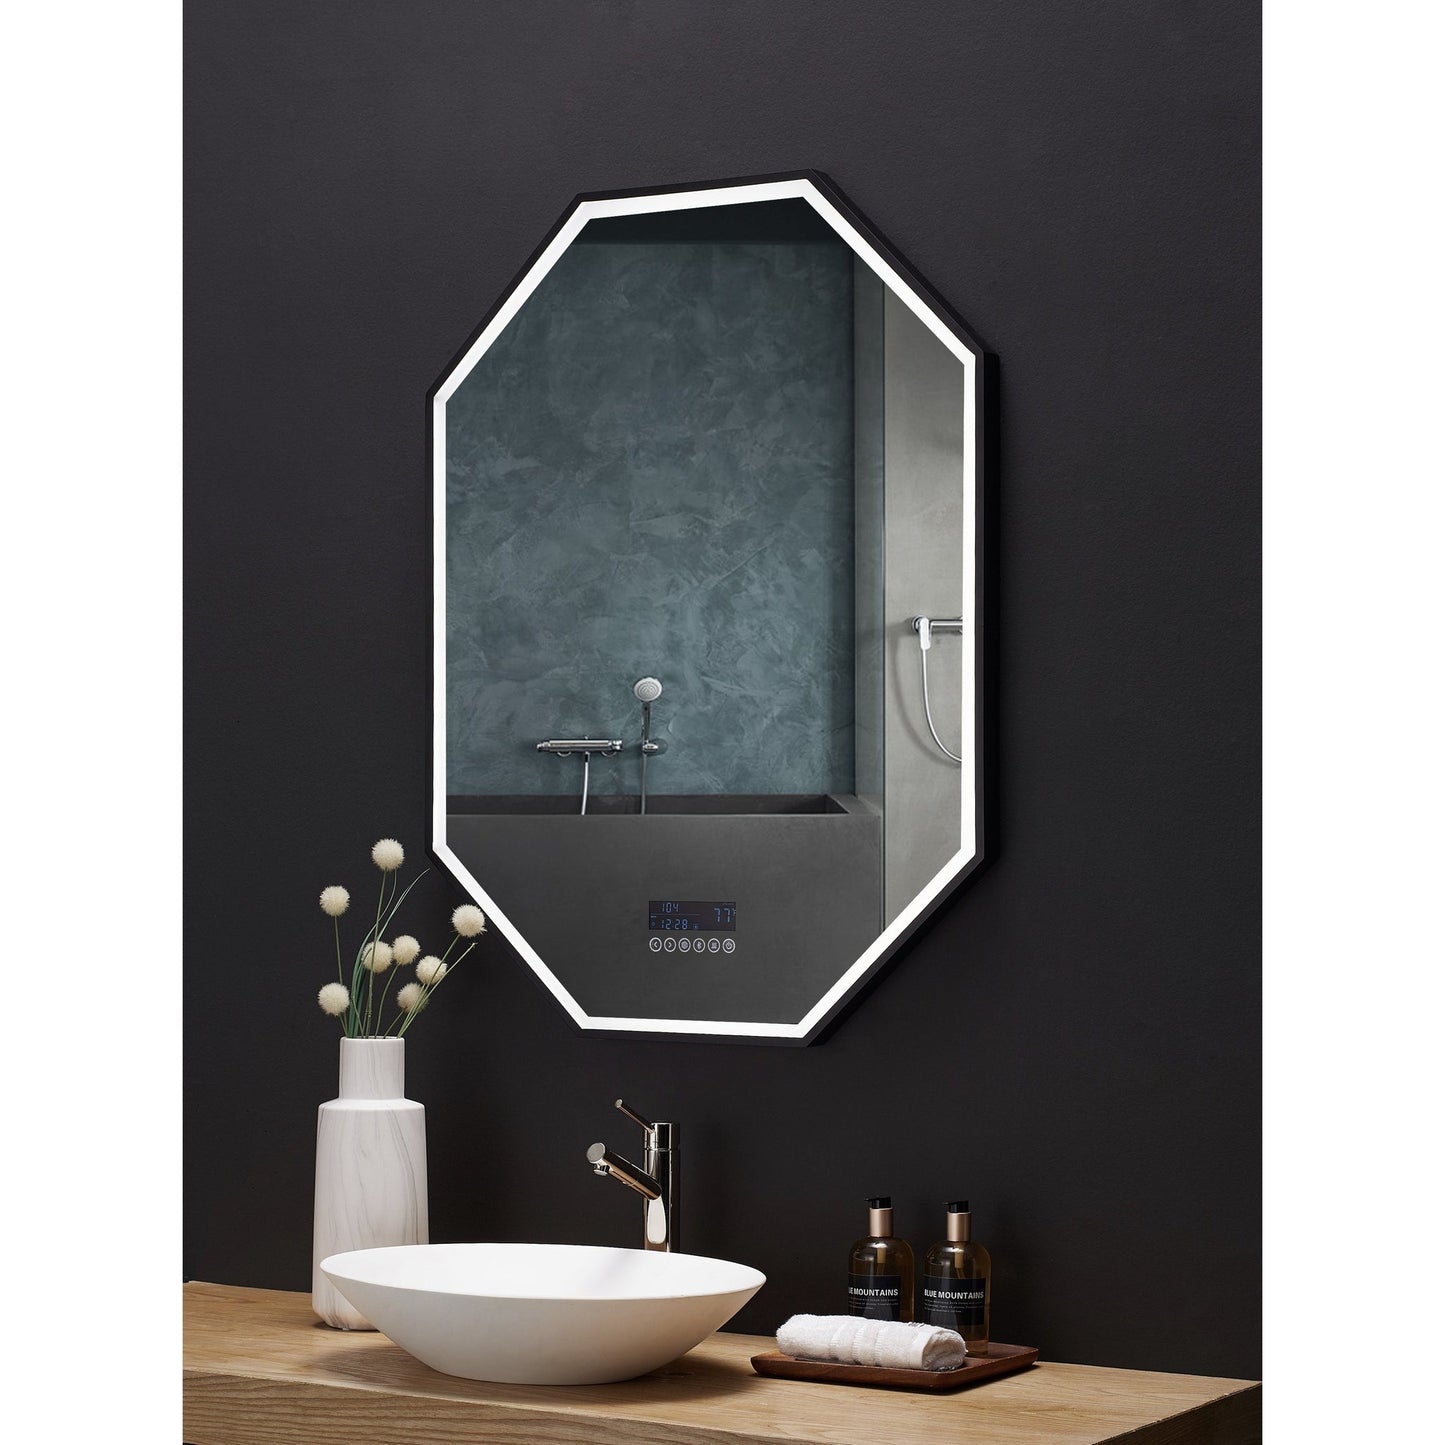 Ancerre Designs Otto 30" x 40" Modern Octagon LED Lighted Black Framed Bathroom Vanity Mirror With Bluetooth, Defogger, Digital Display and Mounting Hardware